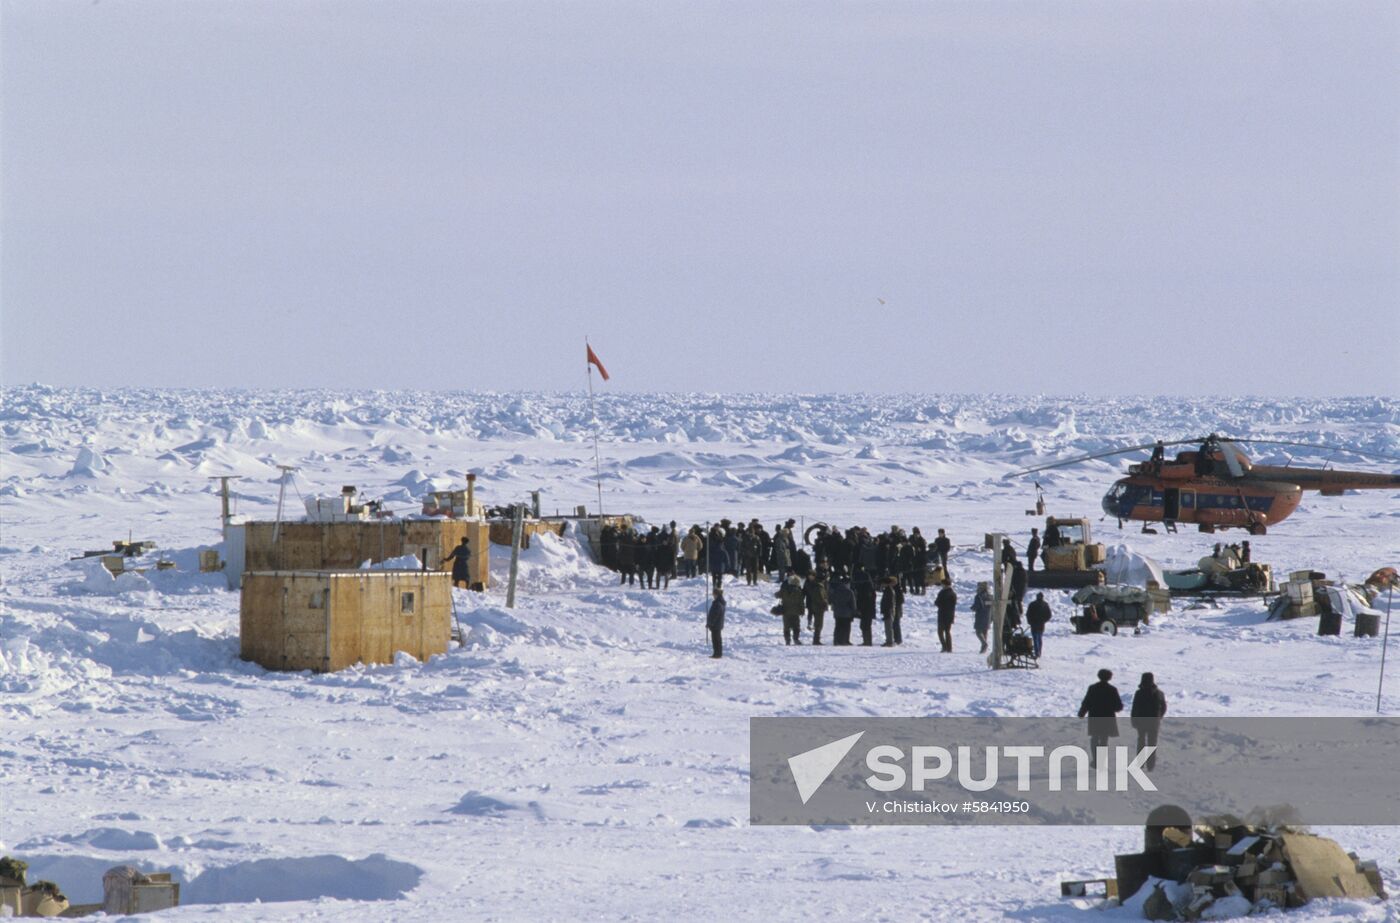 Siberia nuclear icebreaker's high-latitude Arctic expedition